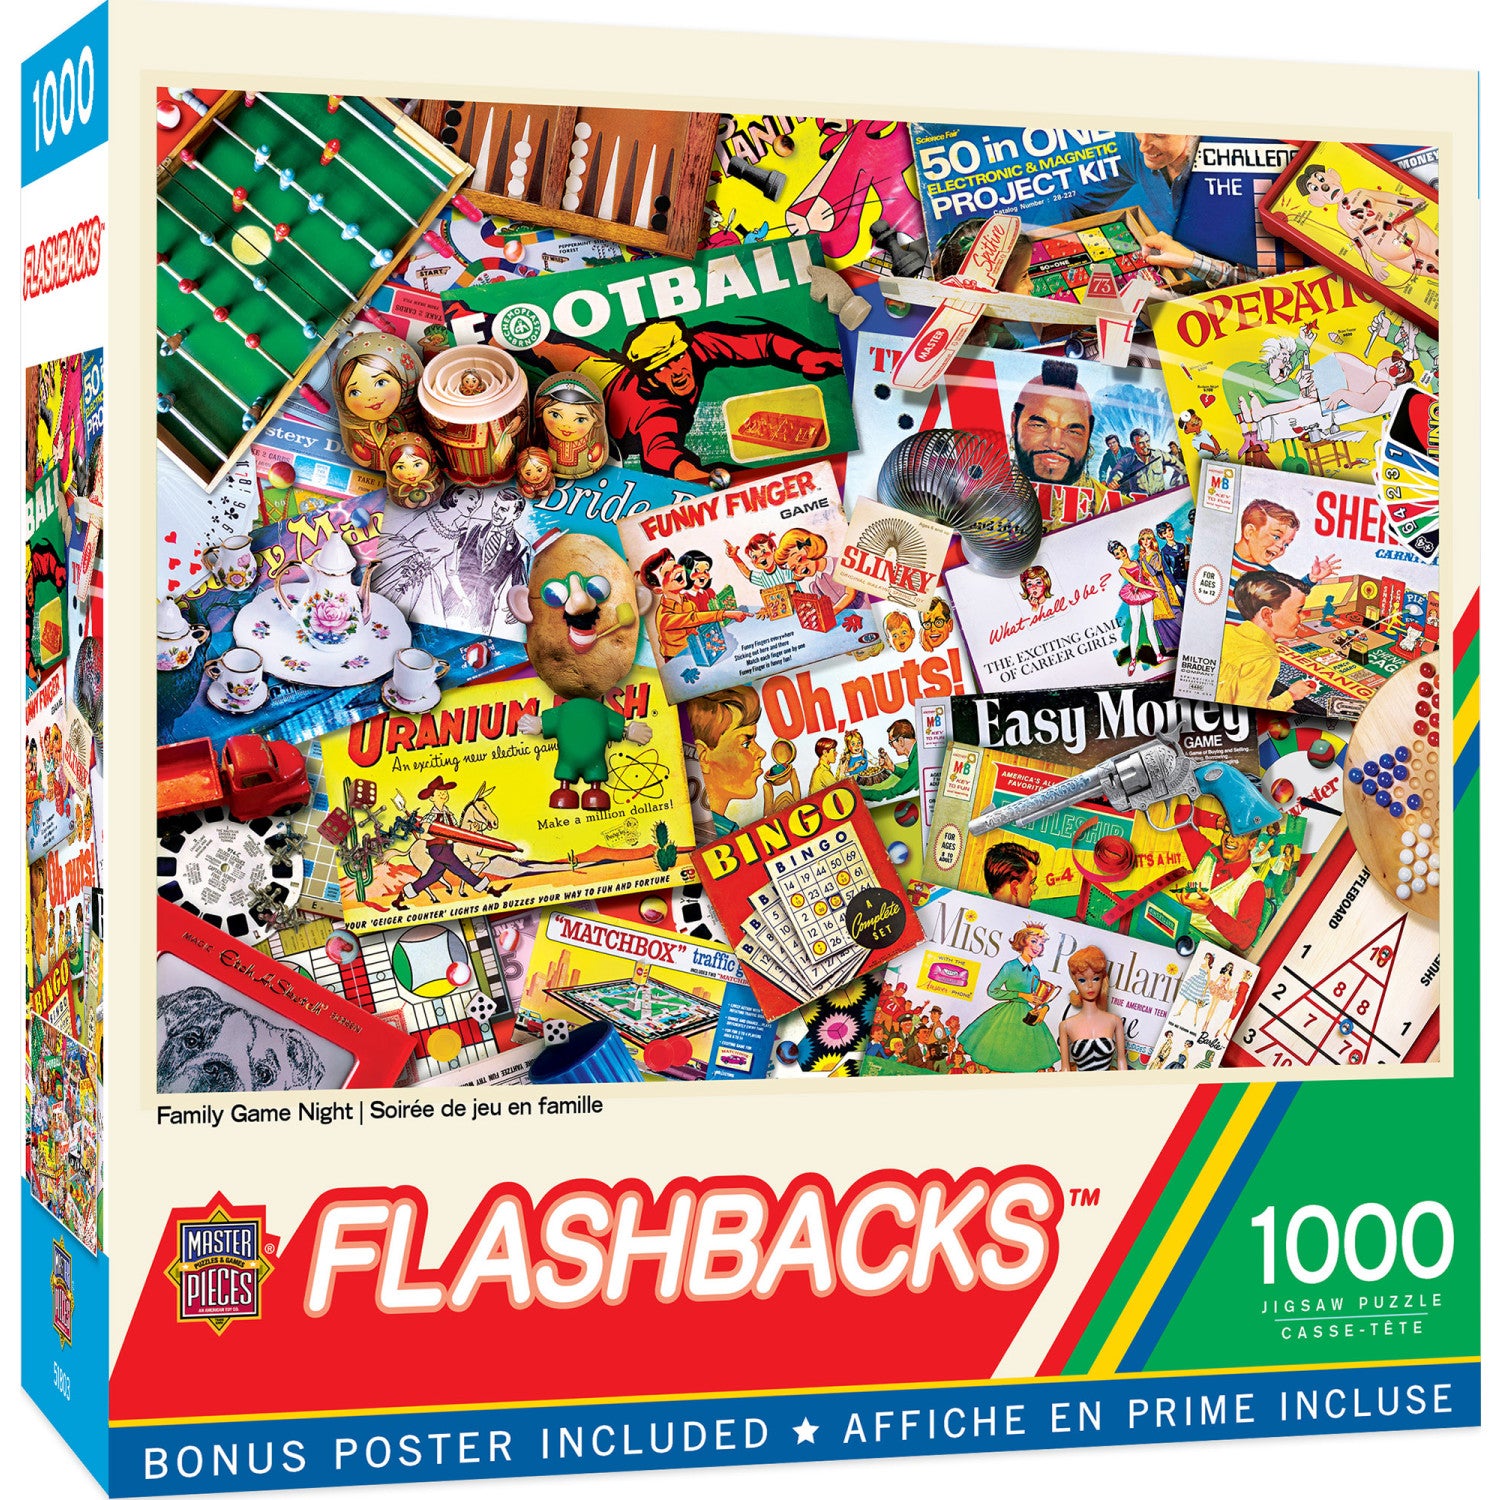 Flashbacks - Family Game Night 1000 Piece Jigsaw Puzzle